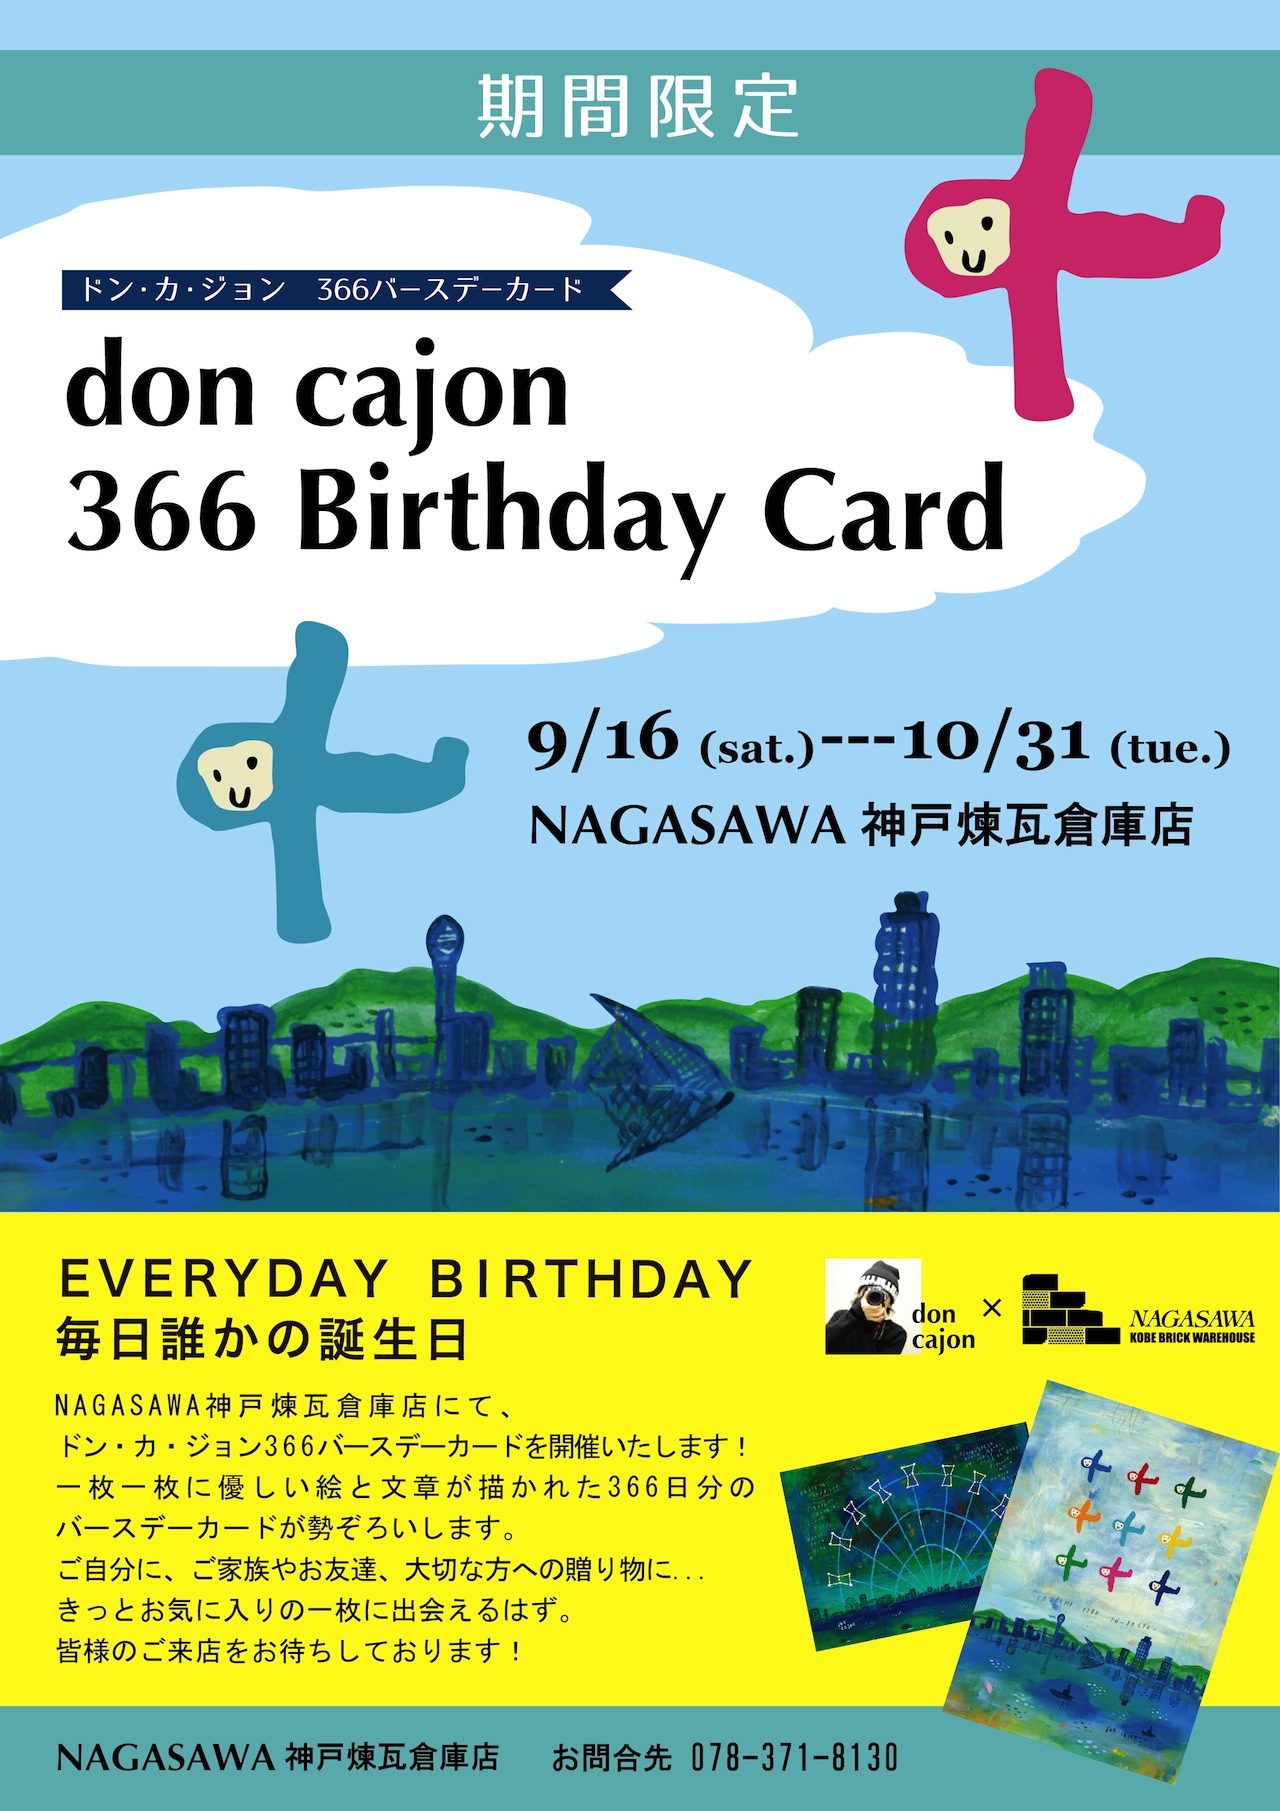 don cajon 366 Birthday Card 販売会 @ NAGASAWA神戸煉瓦倉庫店